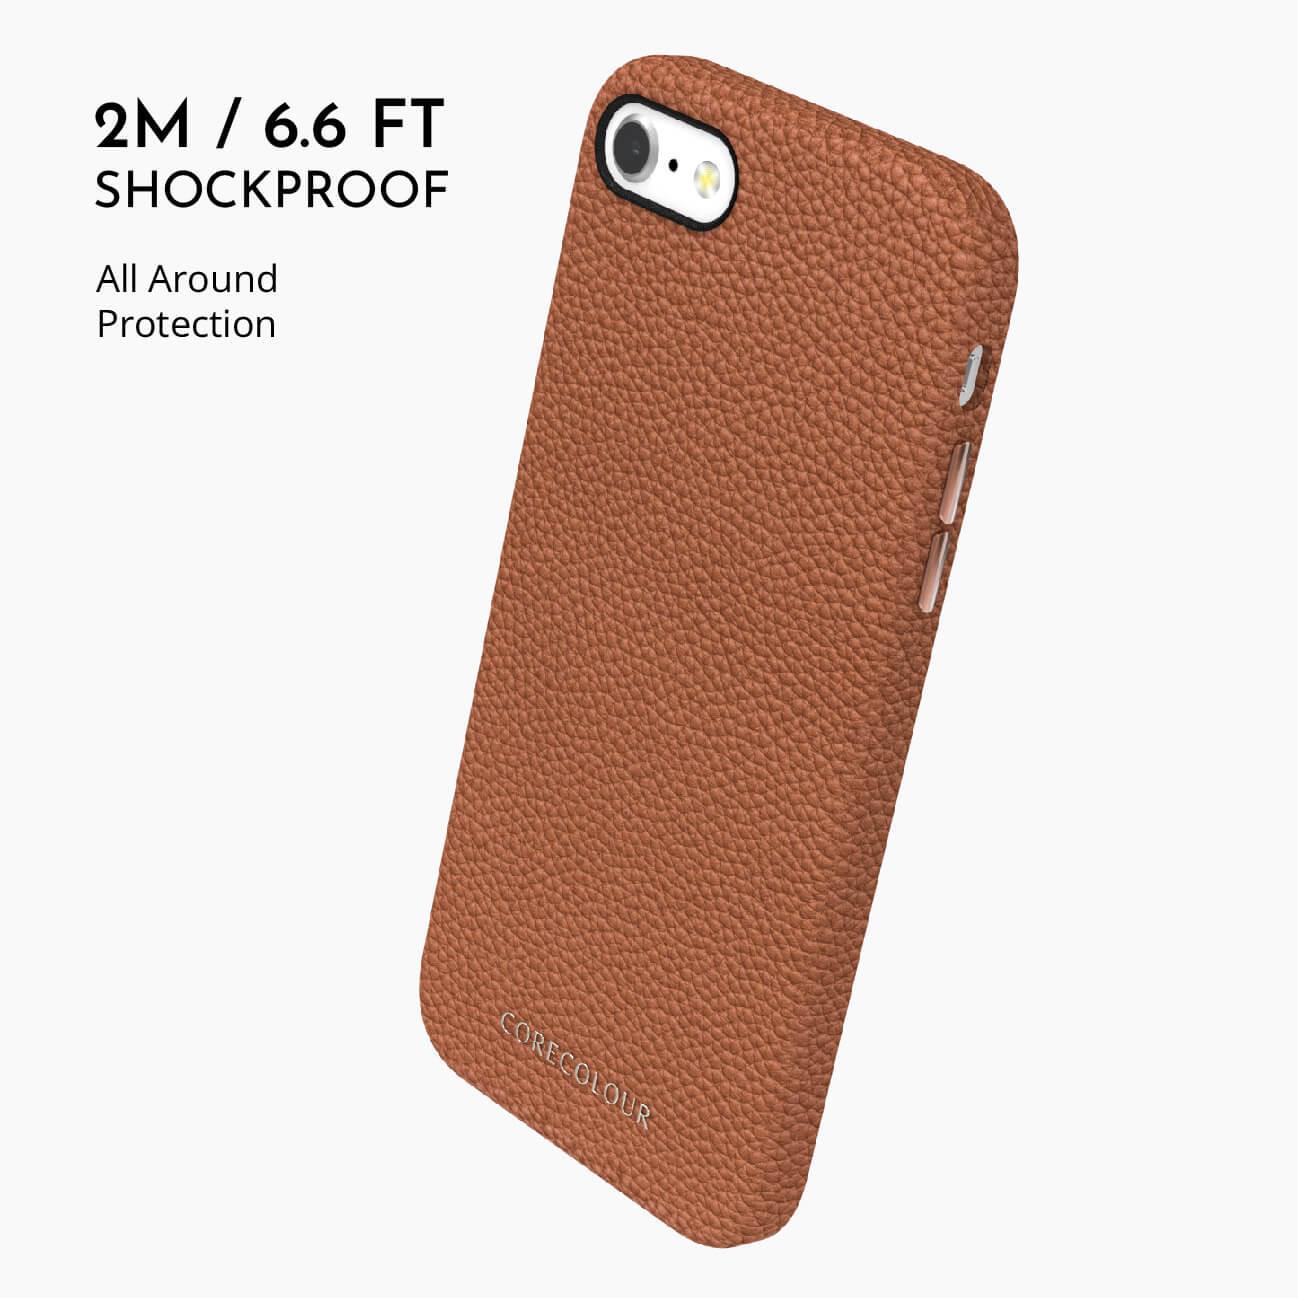 iPhone 7 Brown Premium Leather Phone Case - CORECOLOUR